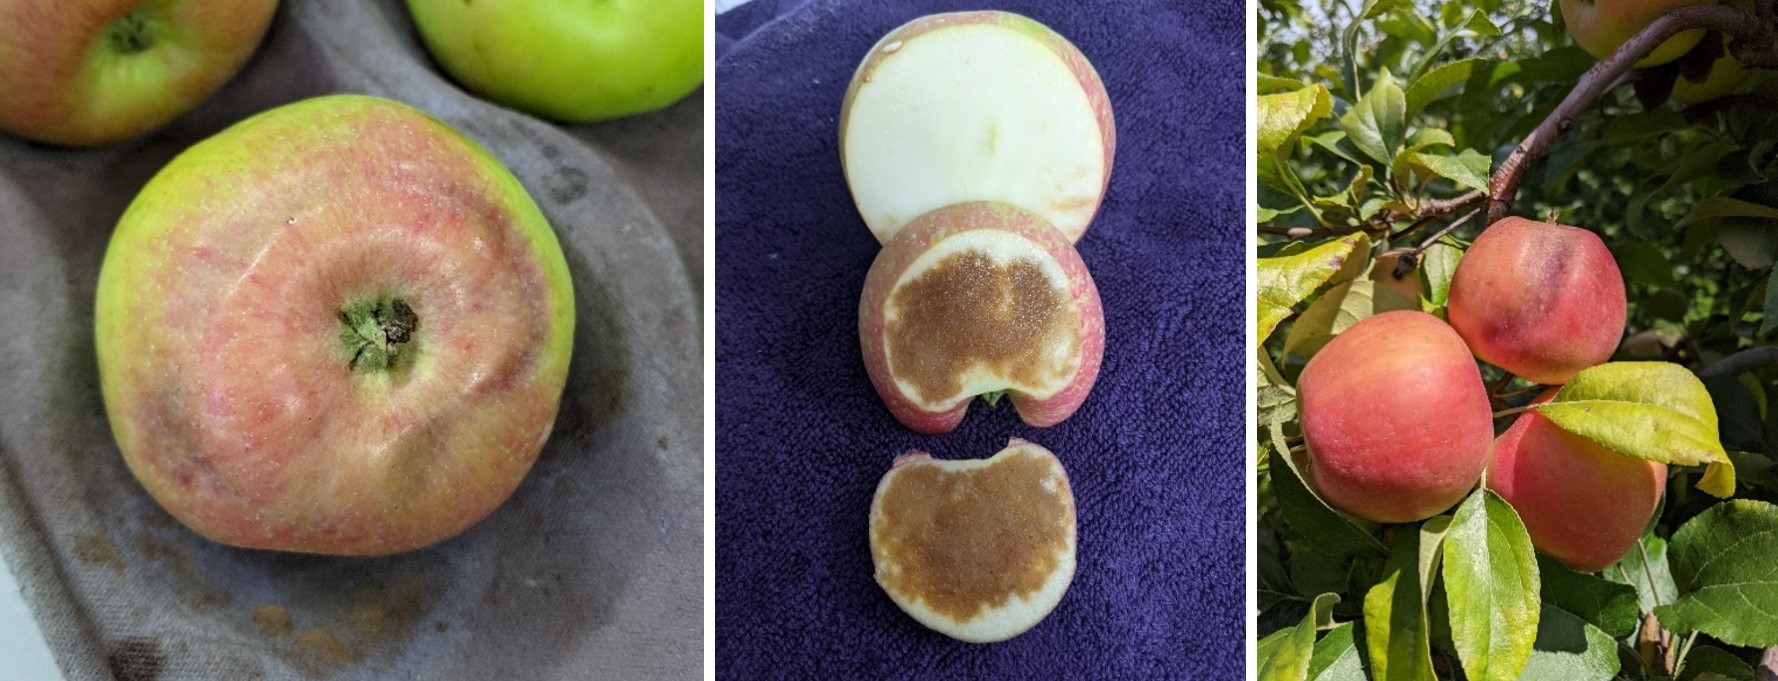 Apples with sunburn damage